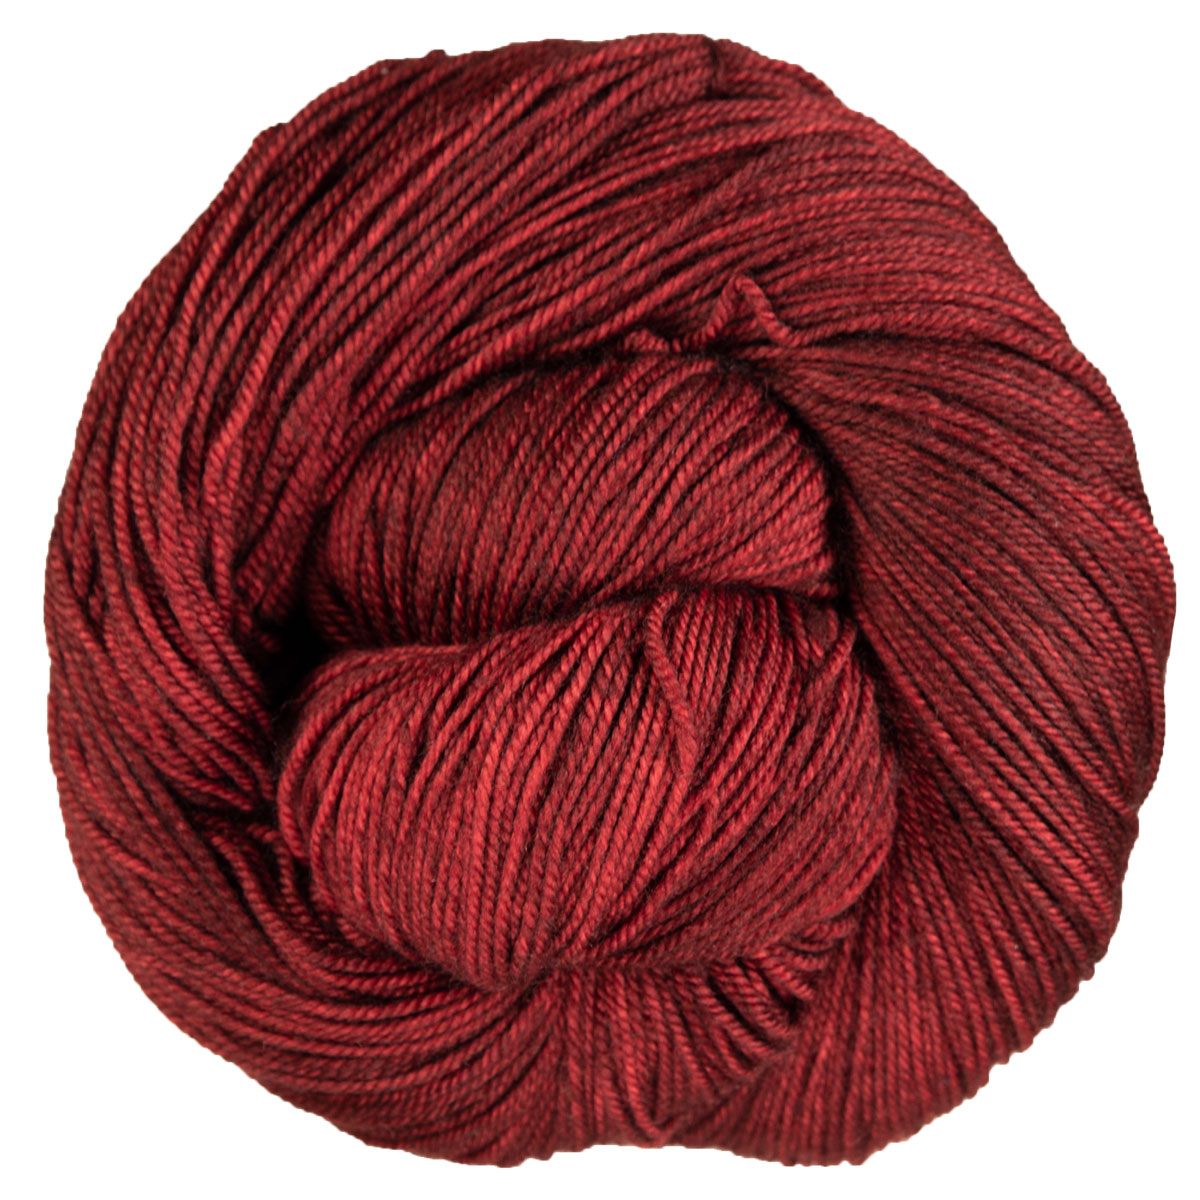 Malabrigo Chunky Yarn - 611 Ravelry Red at Jimmy Beans Wool